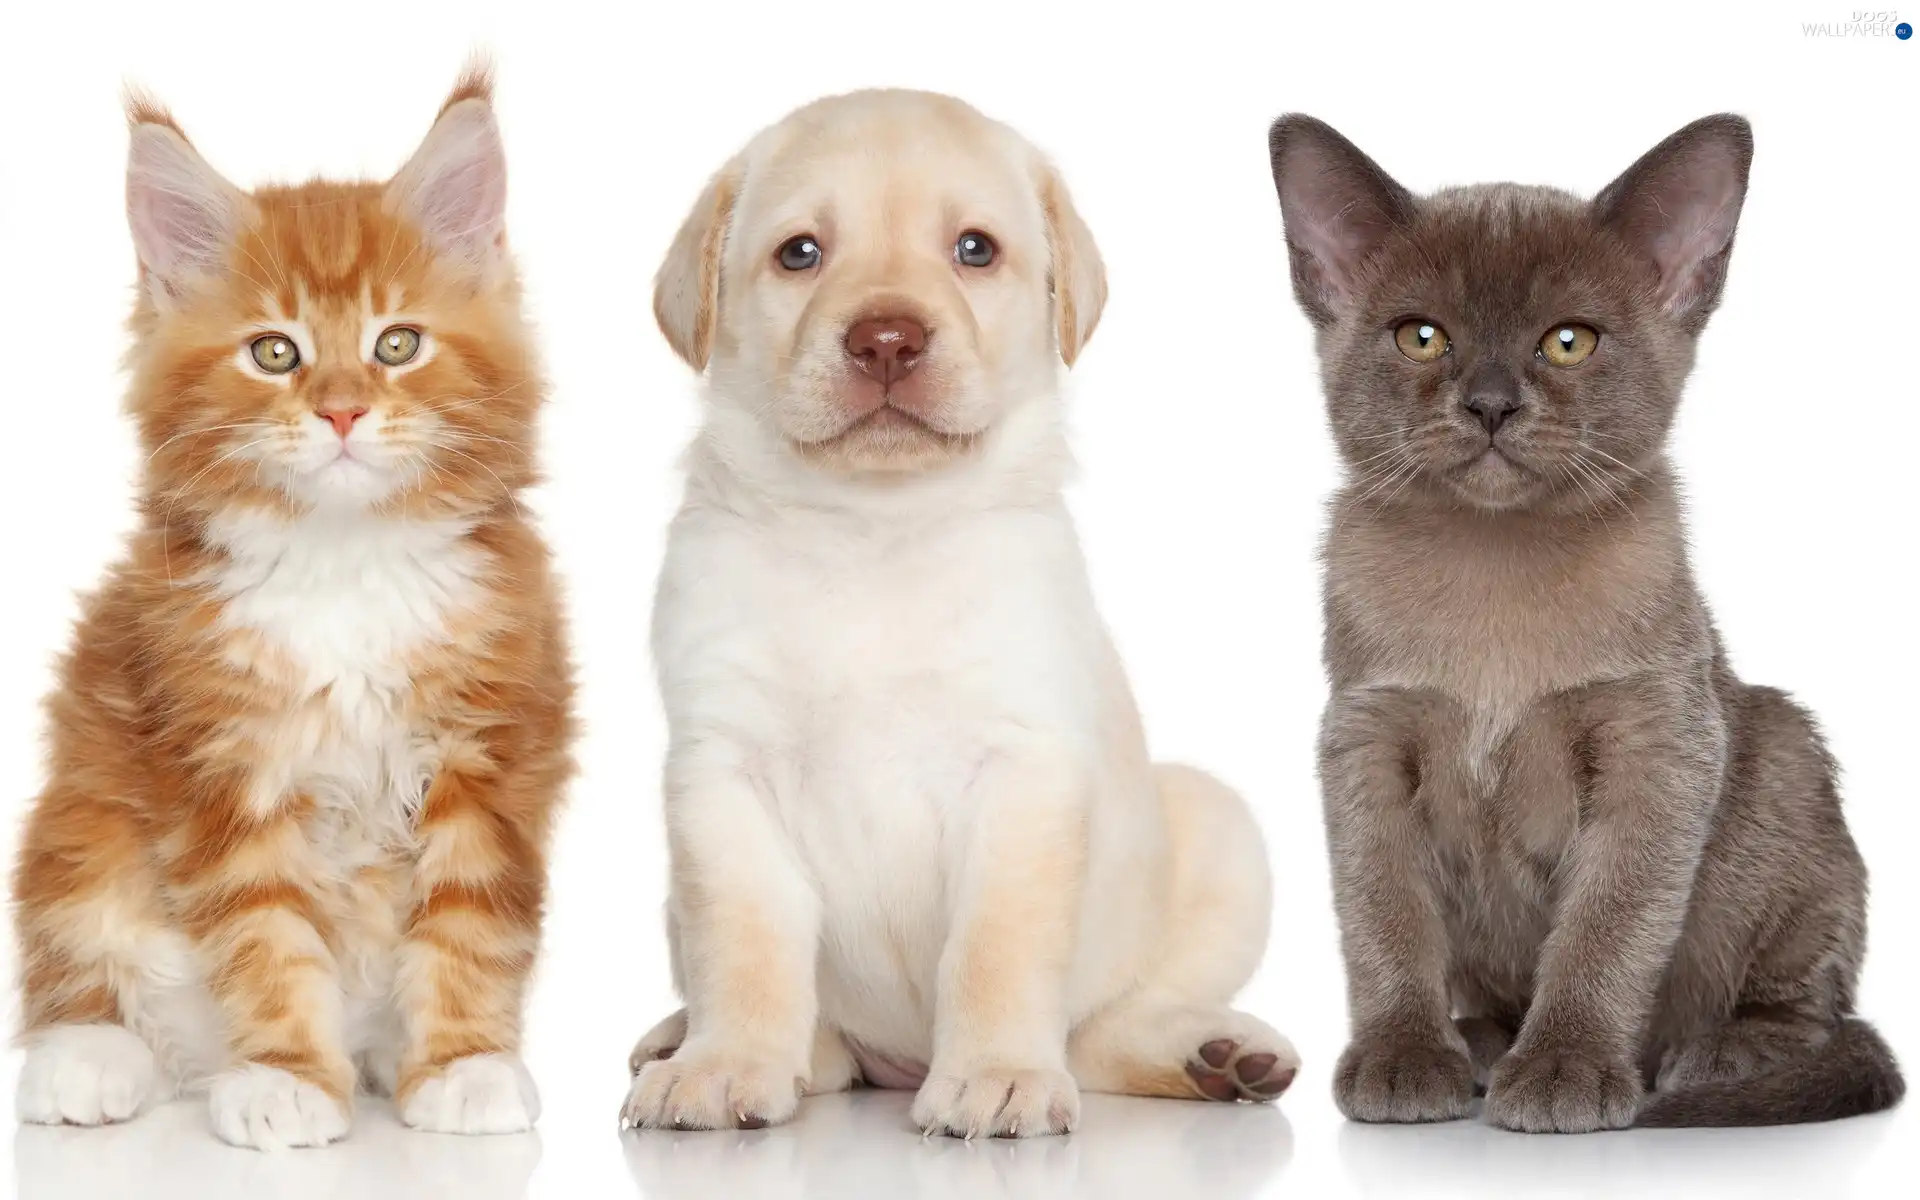 Puppy, Labrador, cat, Burmese Cat, Maine Coon